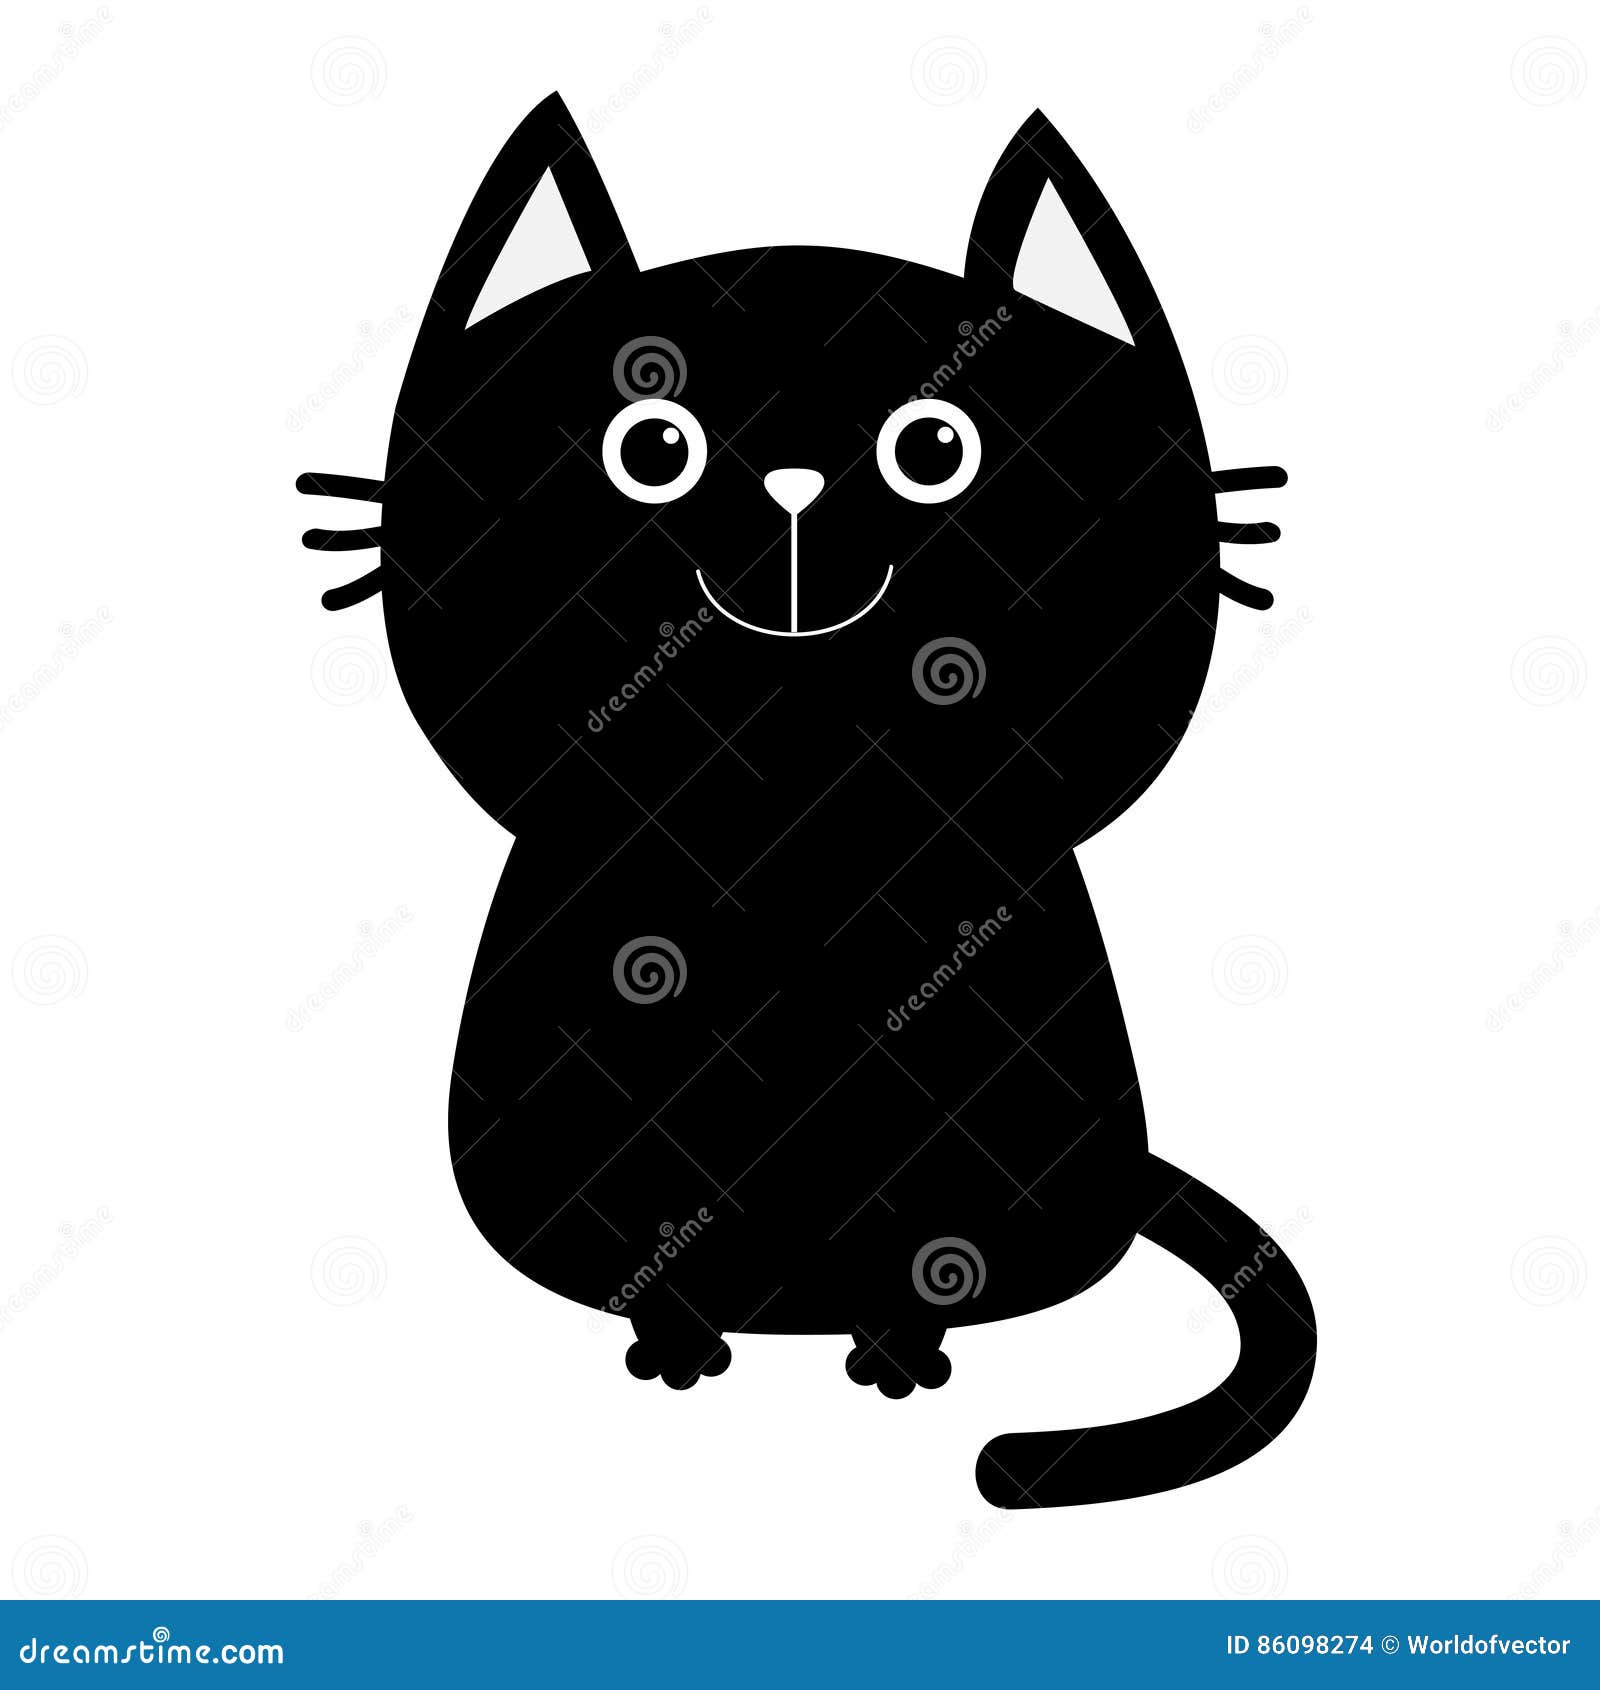 White Cat Kitten Kitty Icon Cute Kawaii Cartoon Character Funny